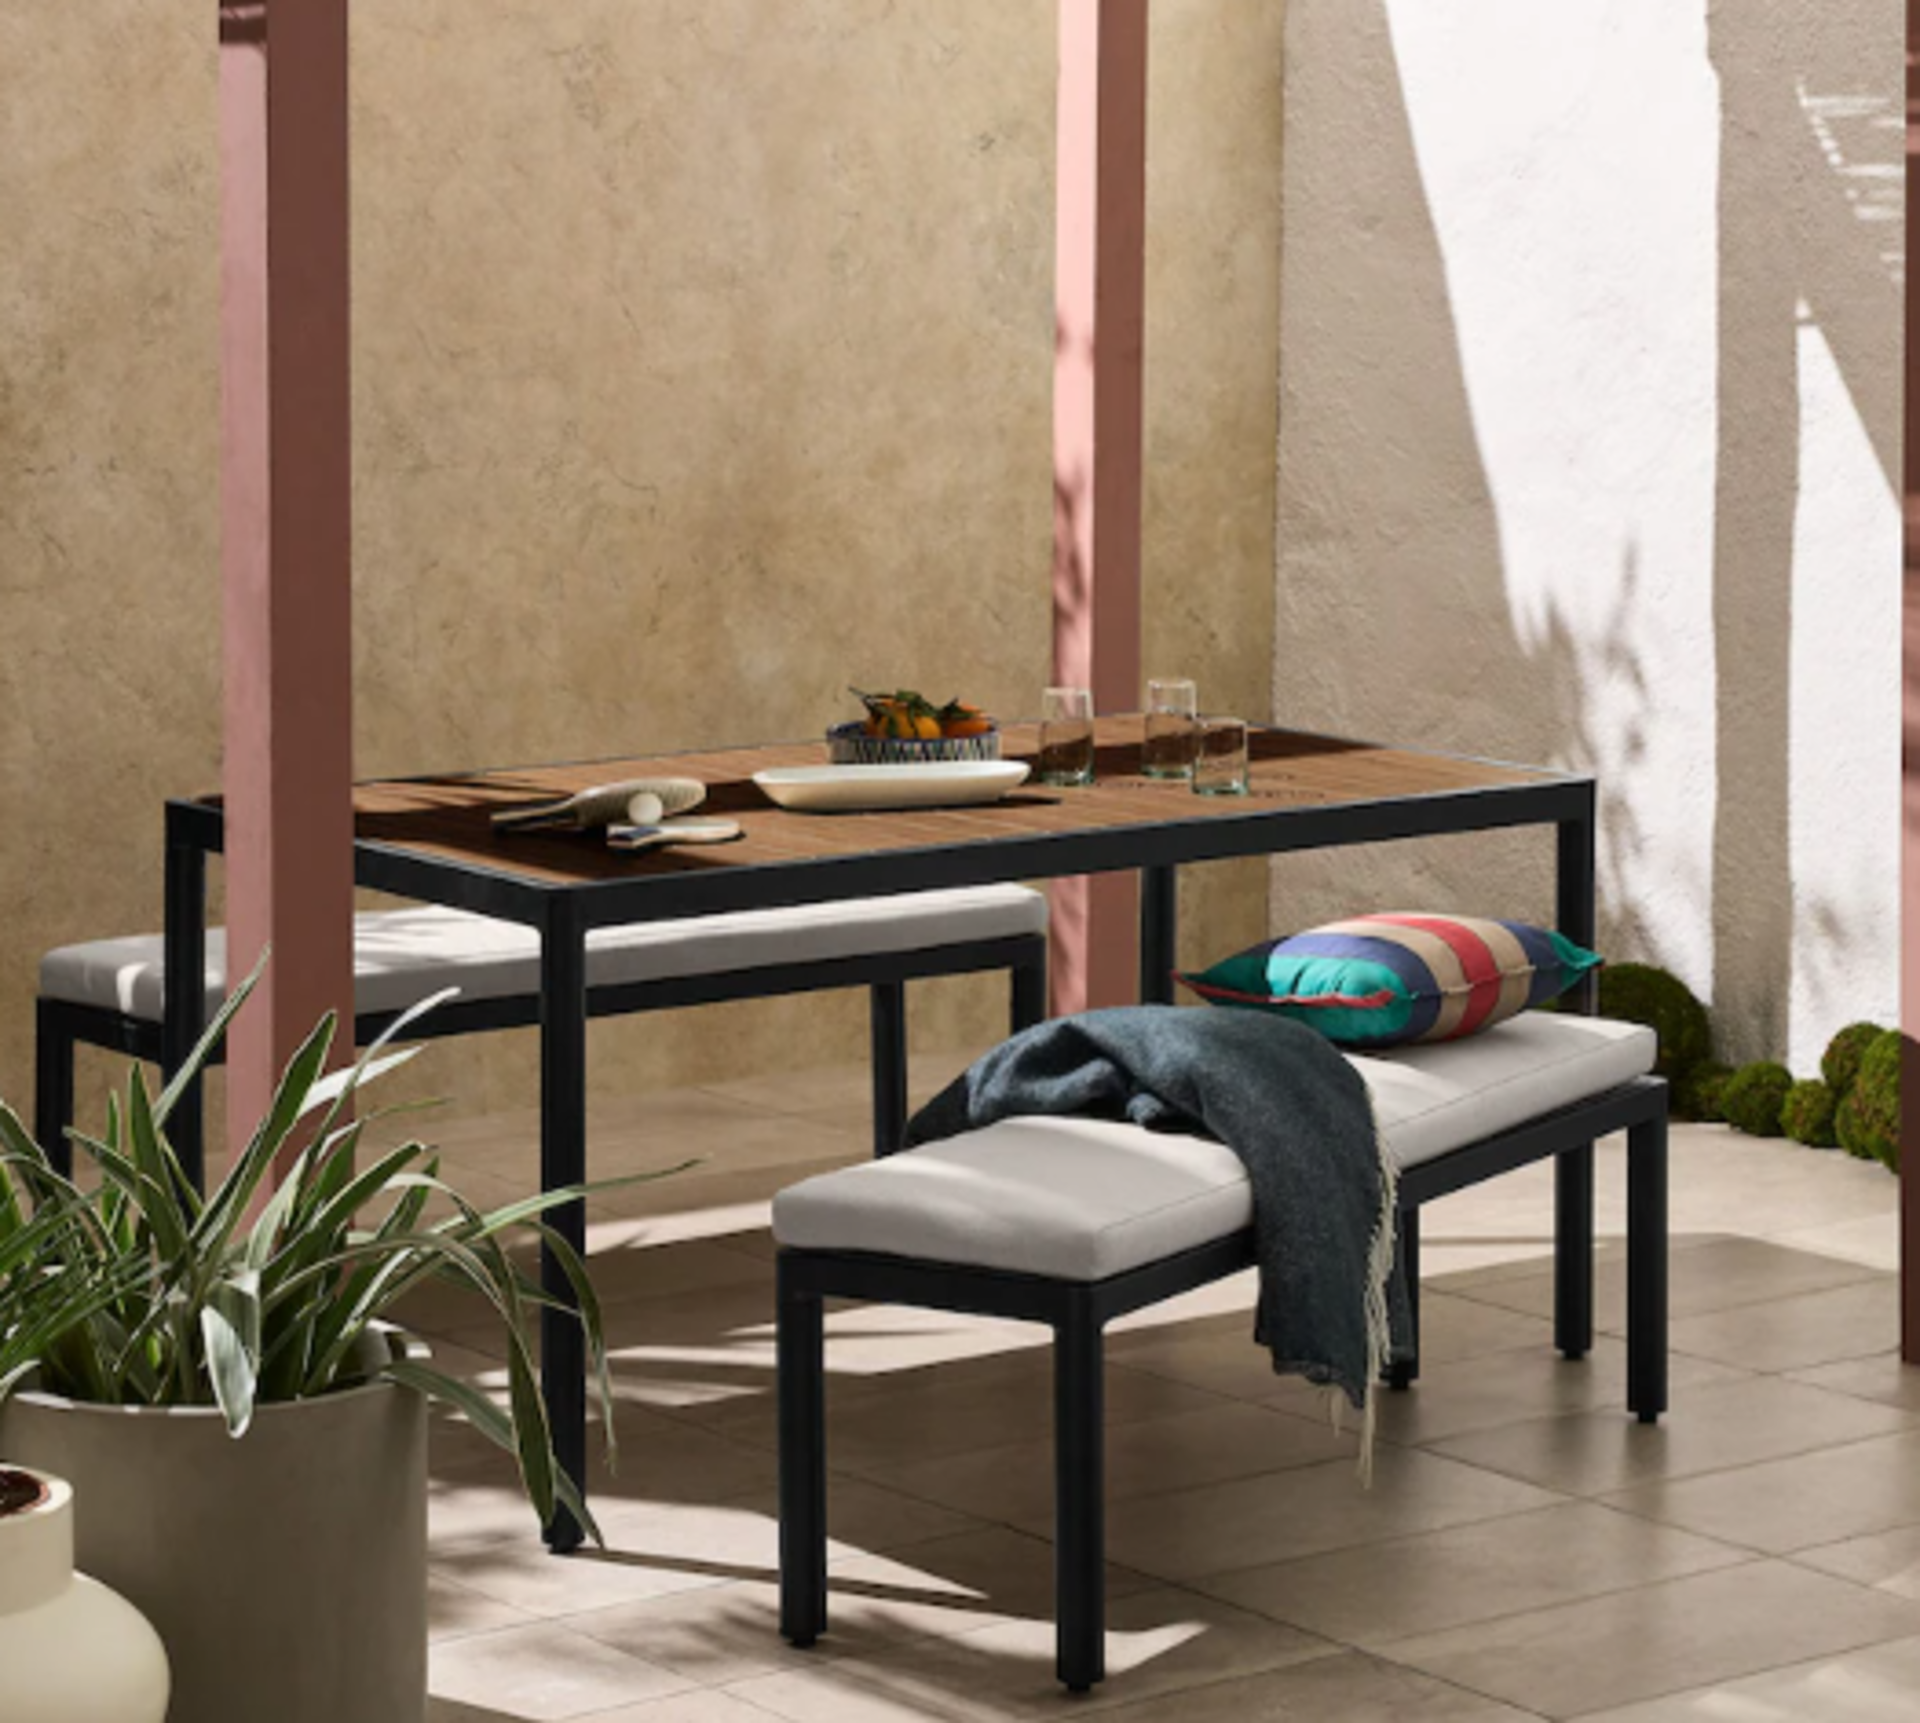 Brand New & Boxed MADE.COM Sassari Garden Dining Bench Set. RRP £799.00. Garden furniture can be